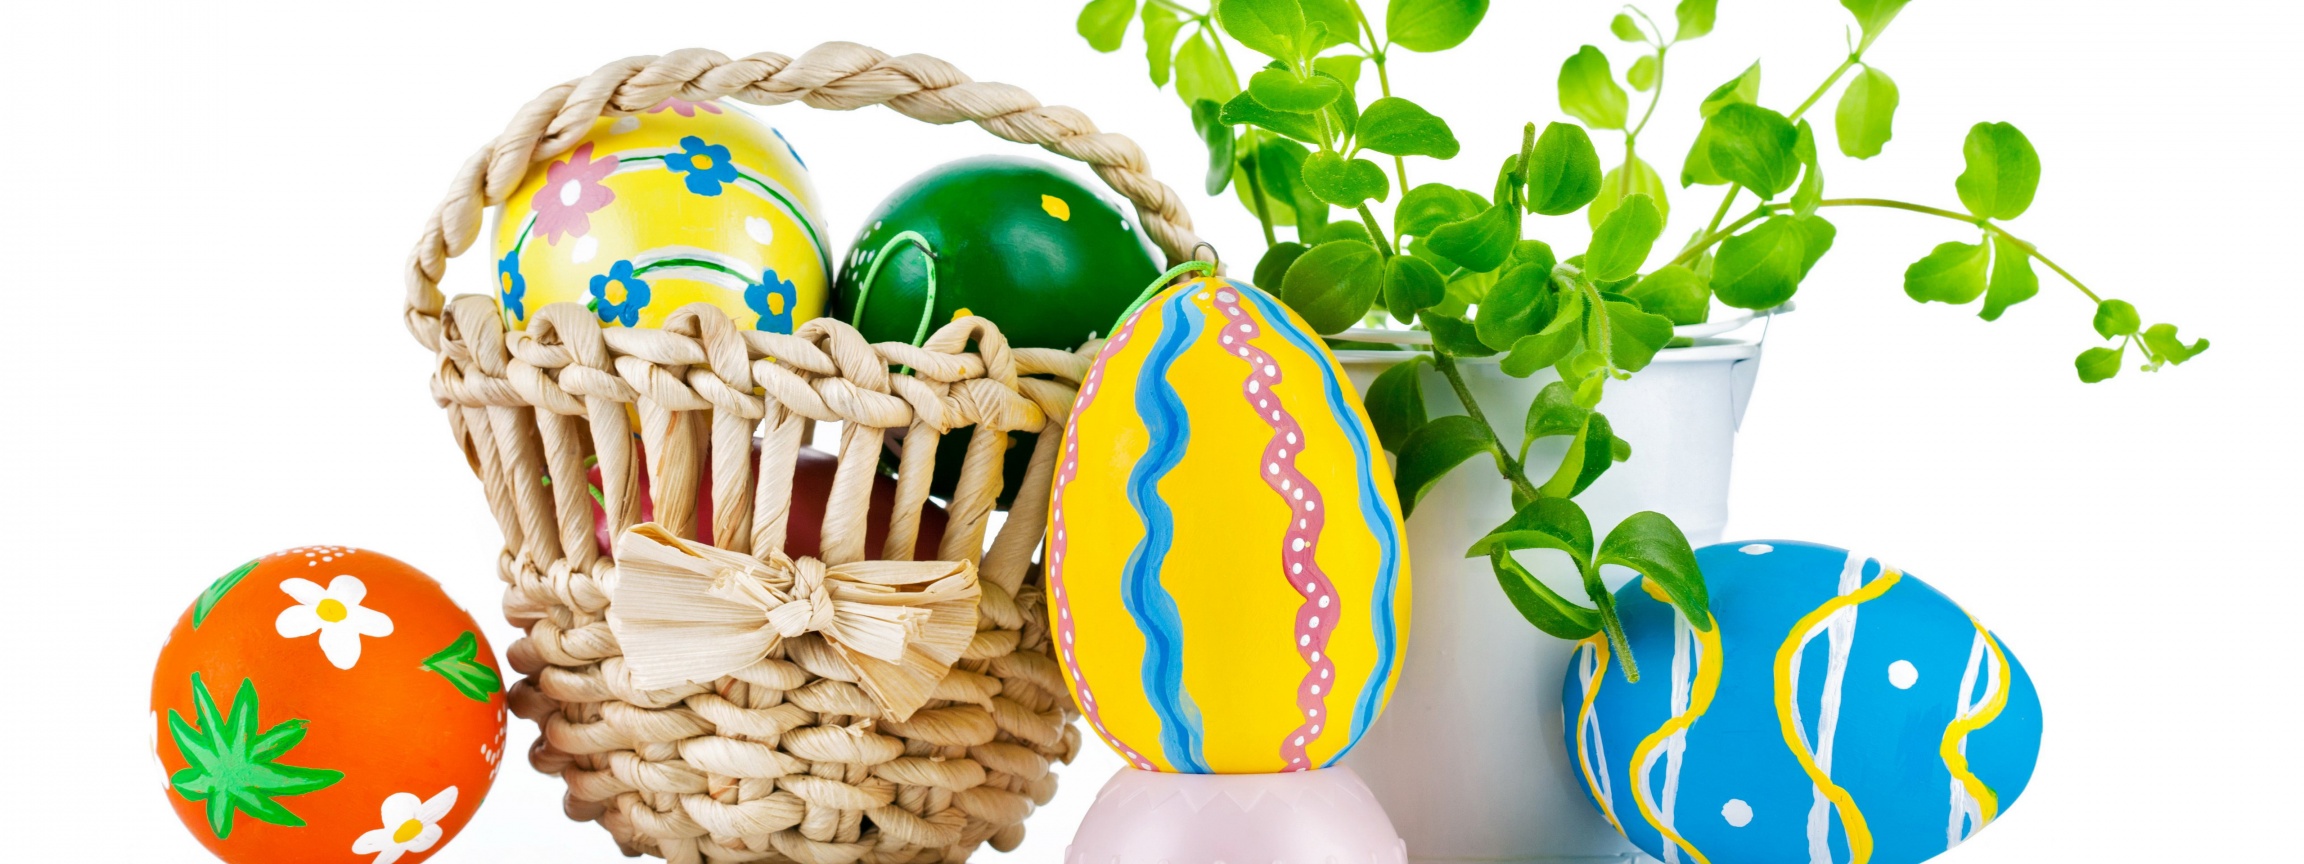 Easter Wicker Basket Eggs Plant